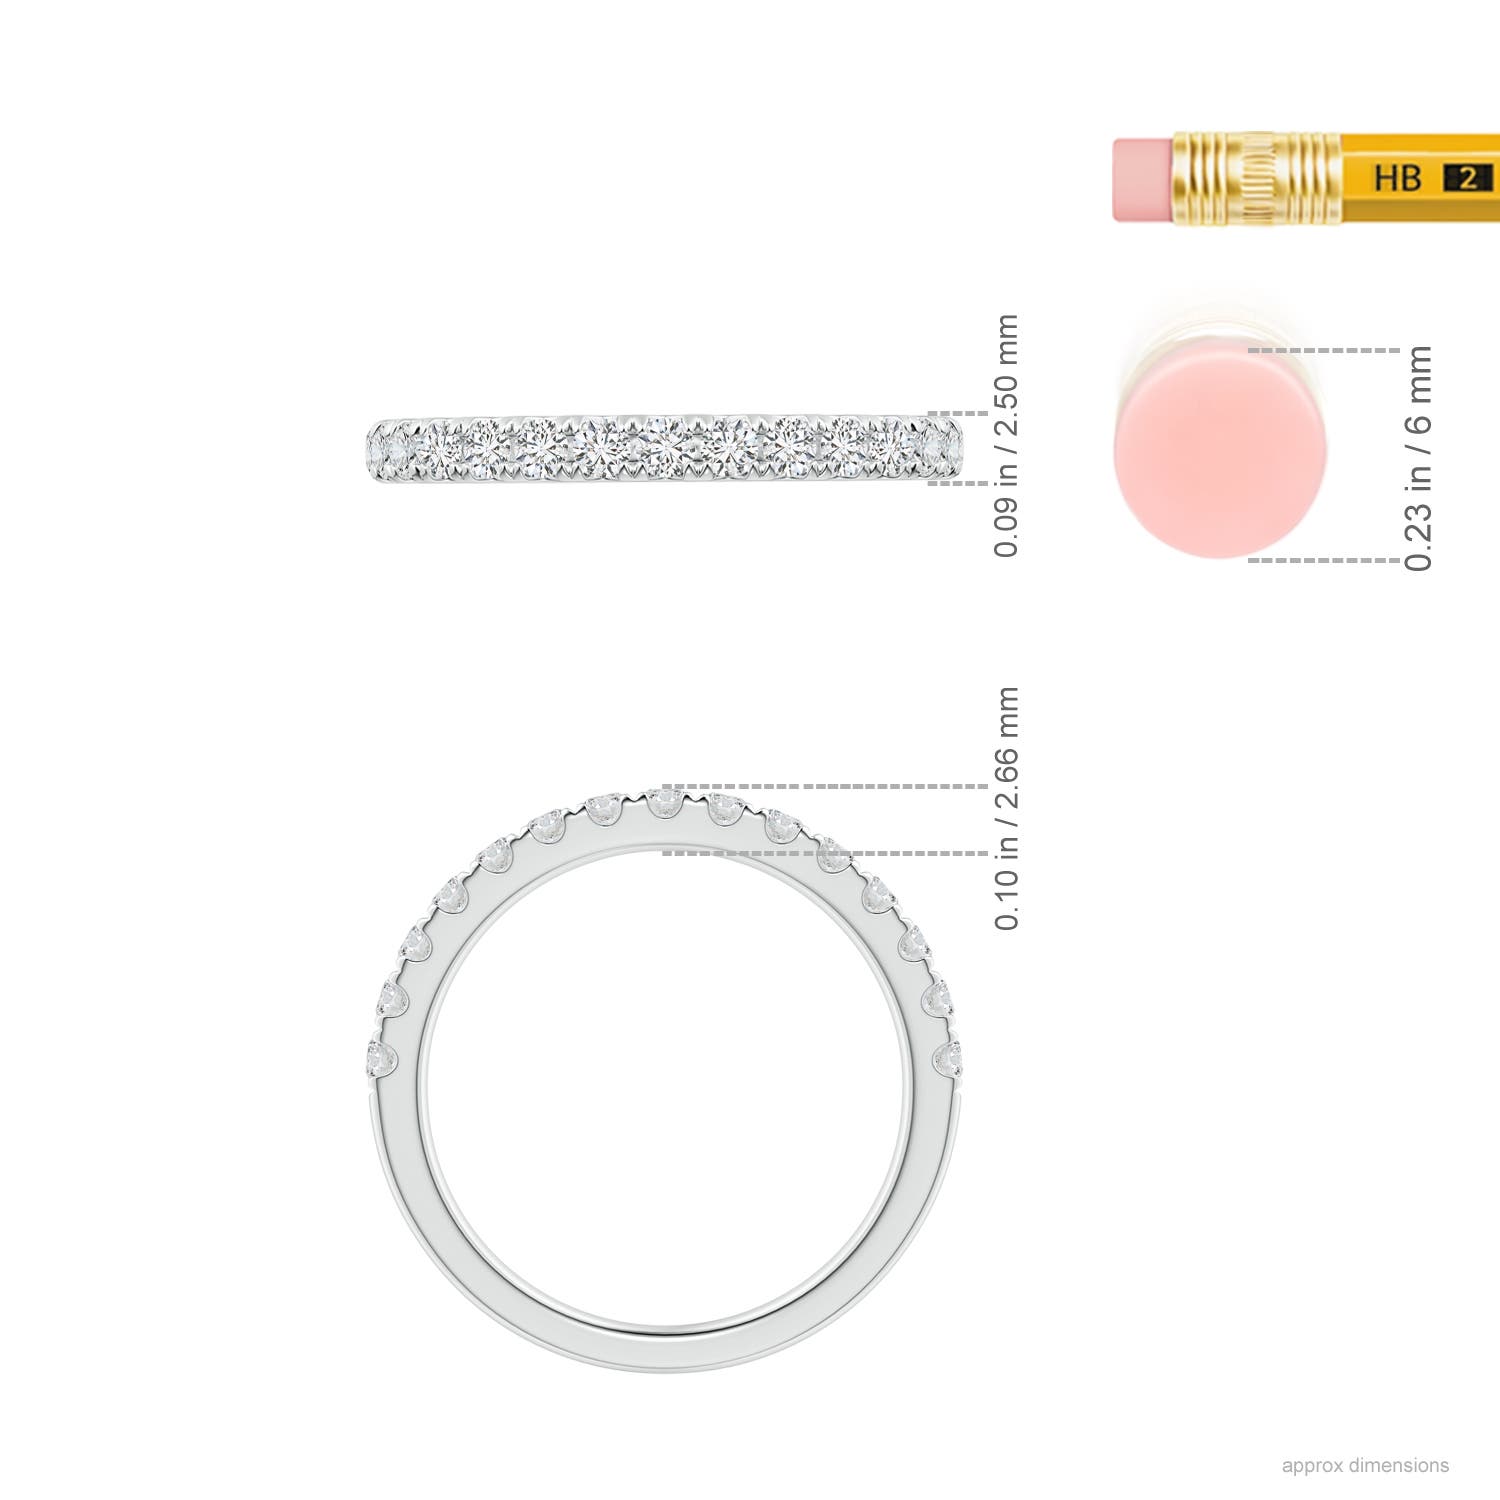 Artificial Diamonds Round White Gold Diamond Ring at Rs 8255 in Kolkata